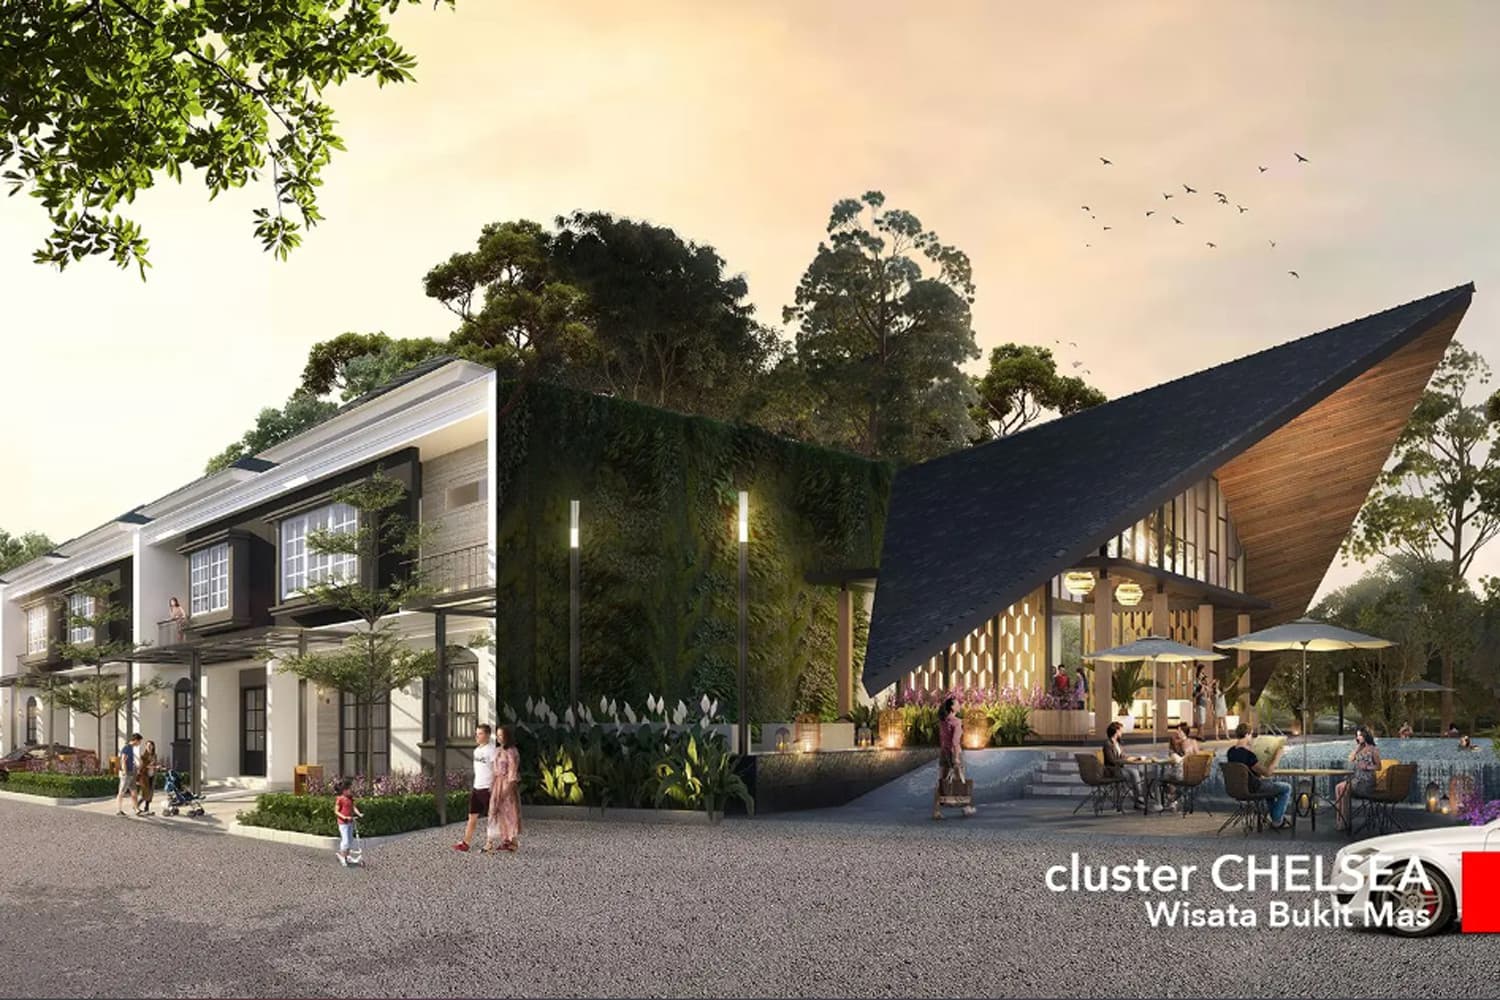 Cluster Area Chelsea Wisata Bukit Mas